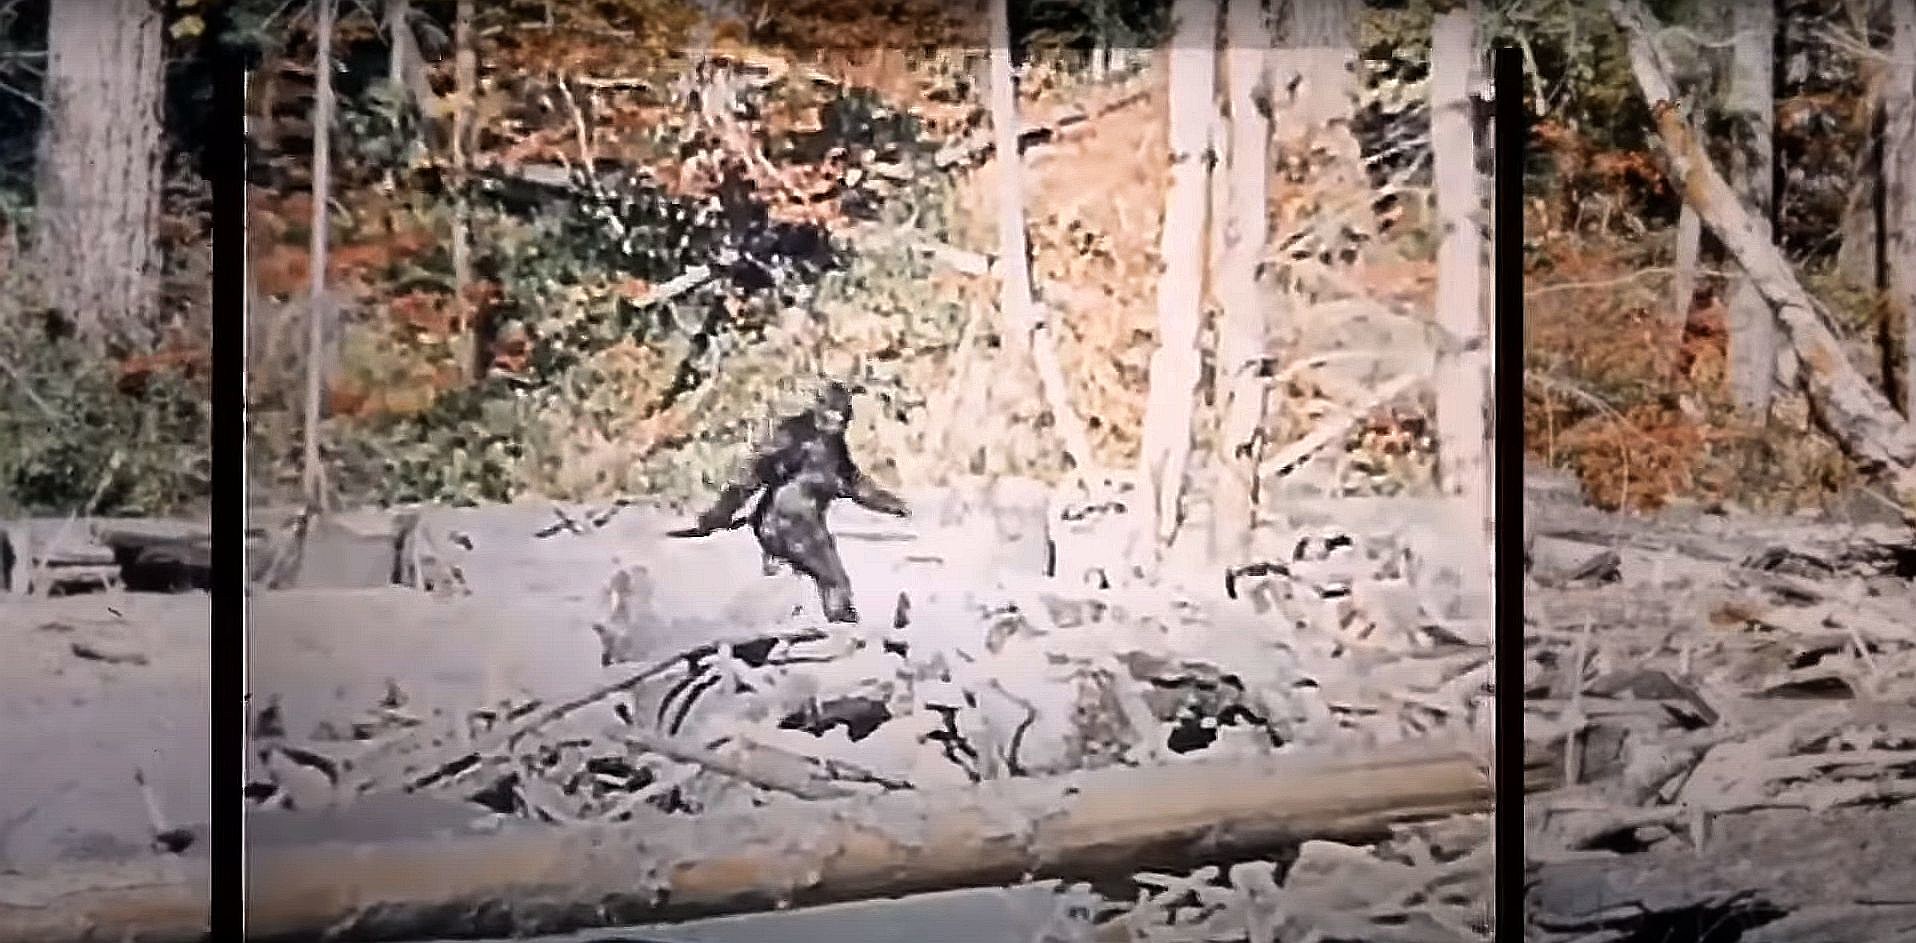 Colorado Train Riders Capture Video of Bigfoot-Like Creature